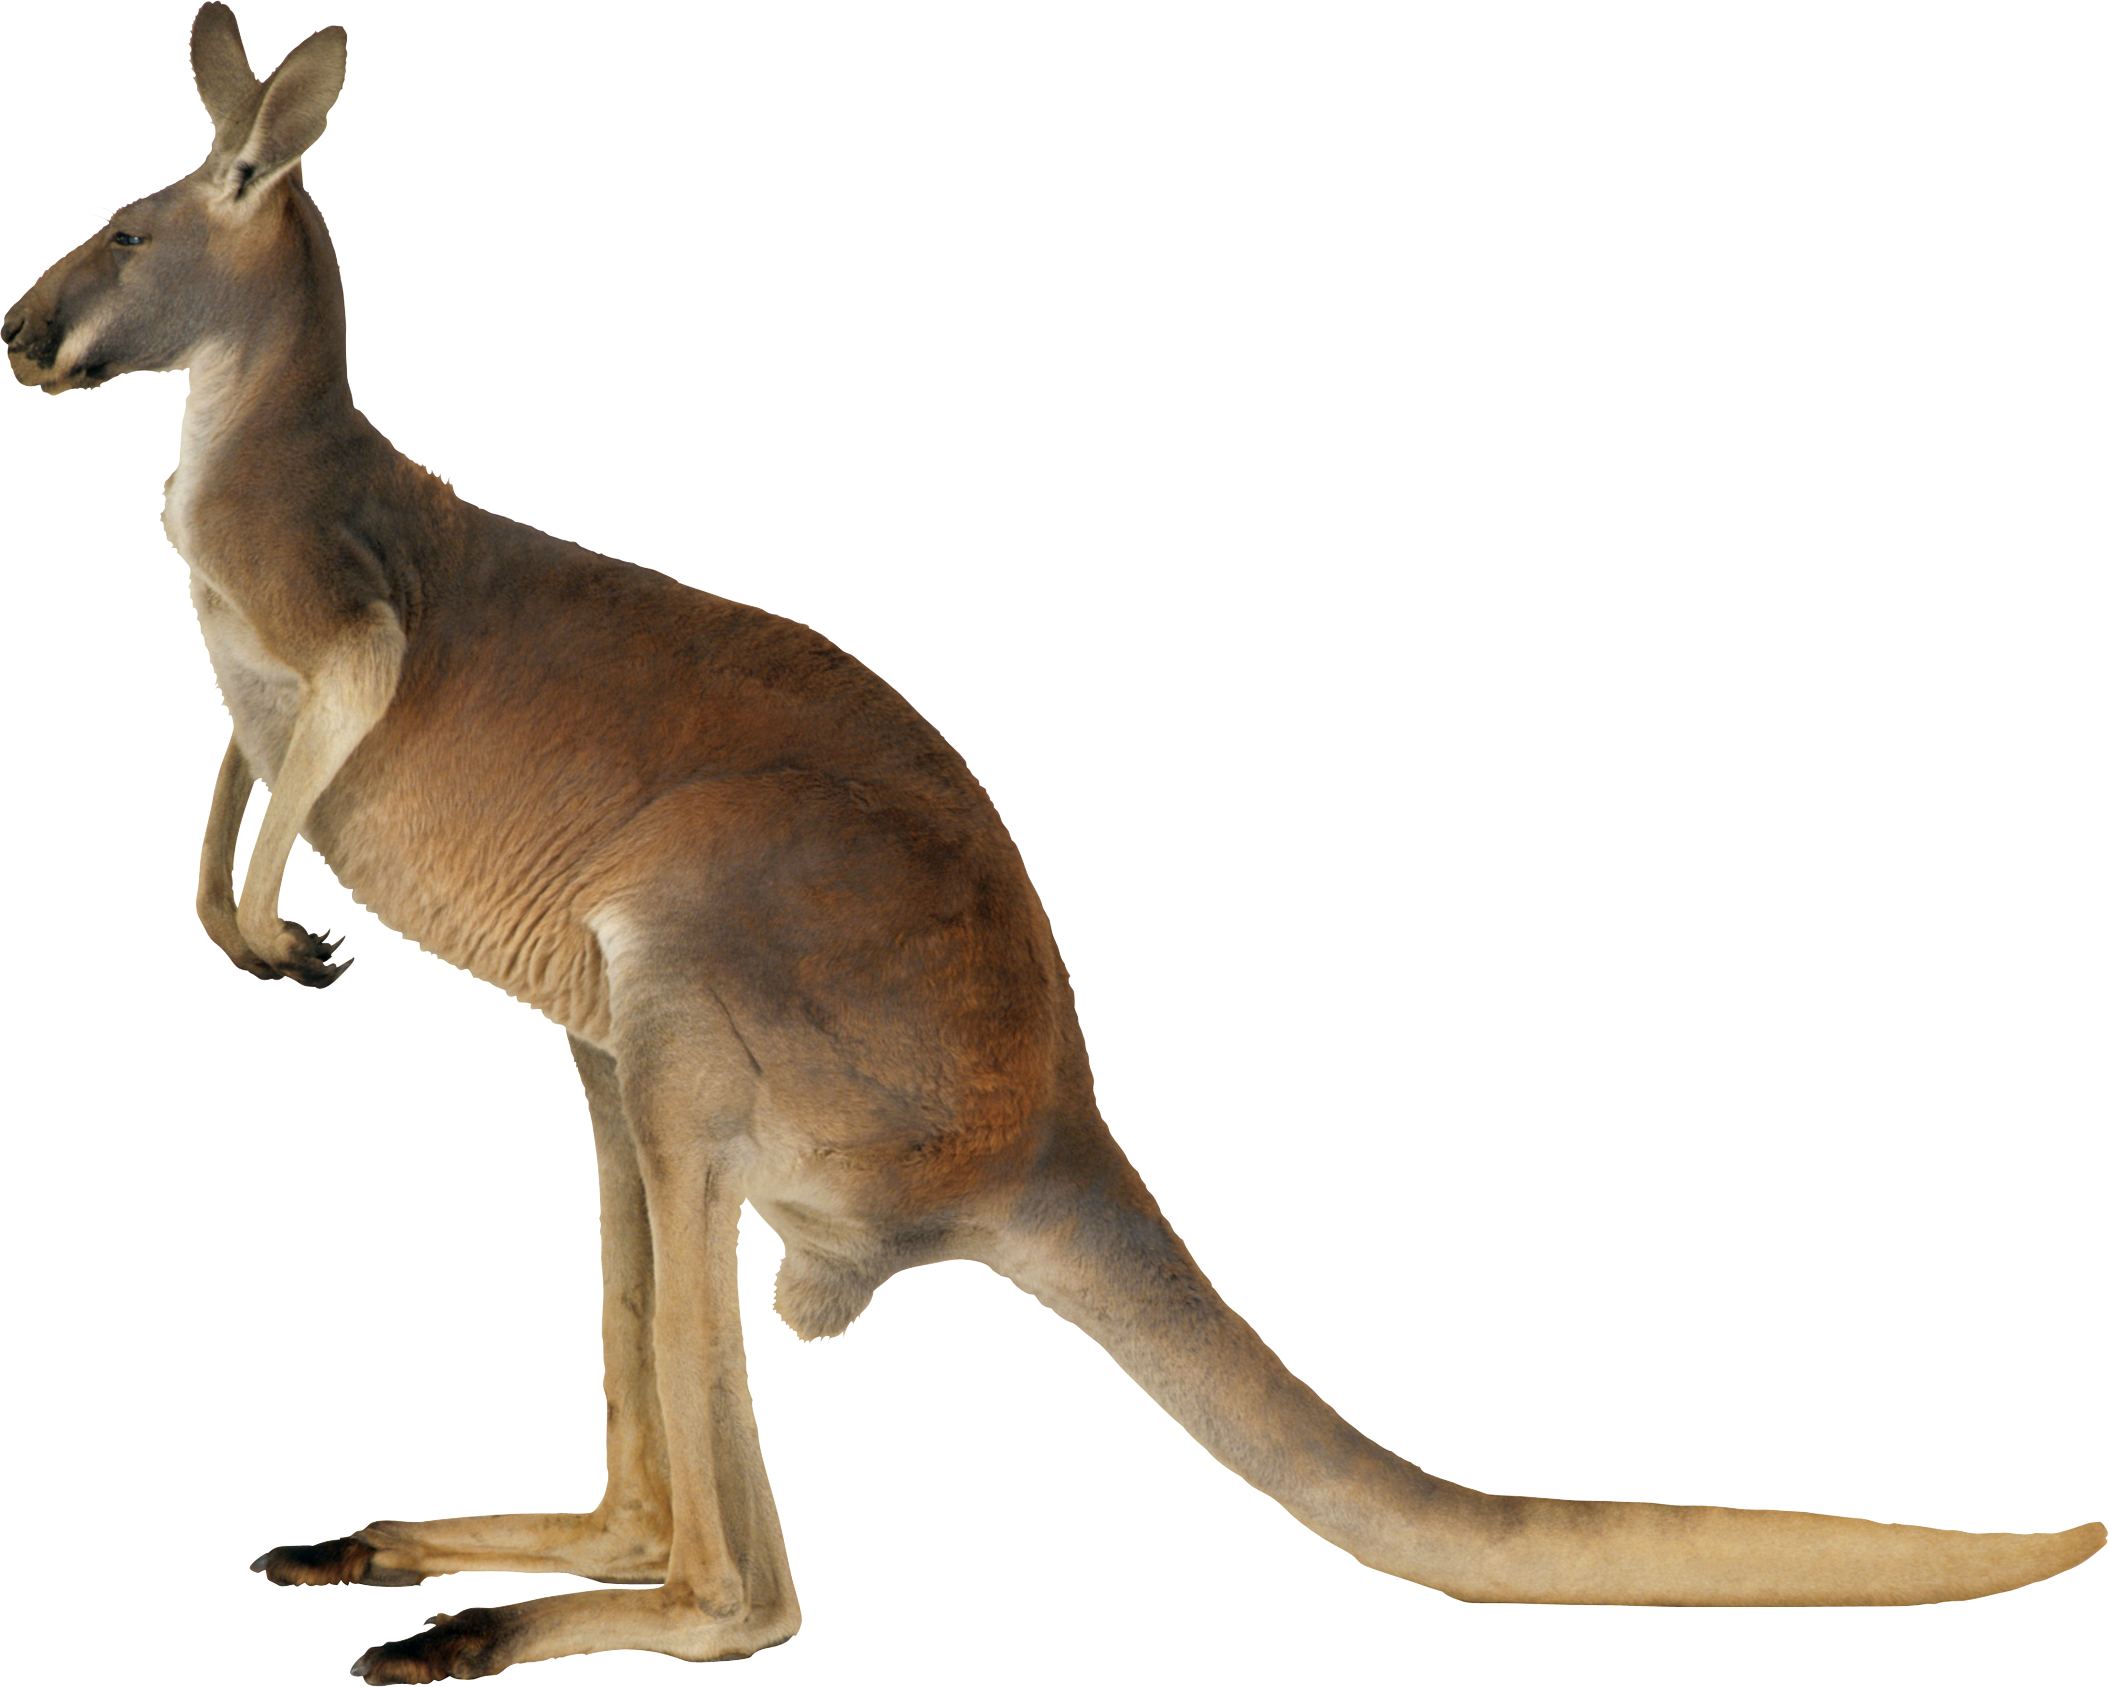 Png images free download. Kangaroo clipart foot